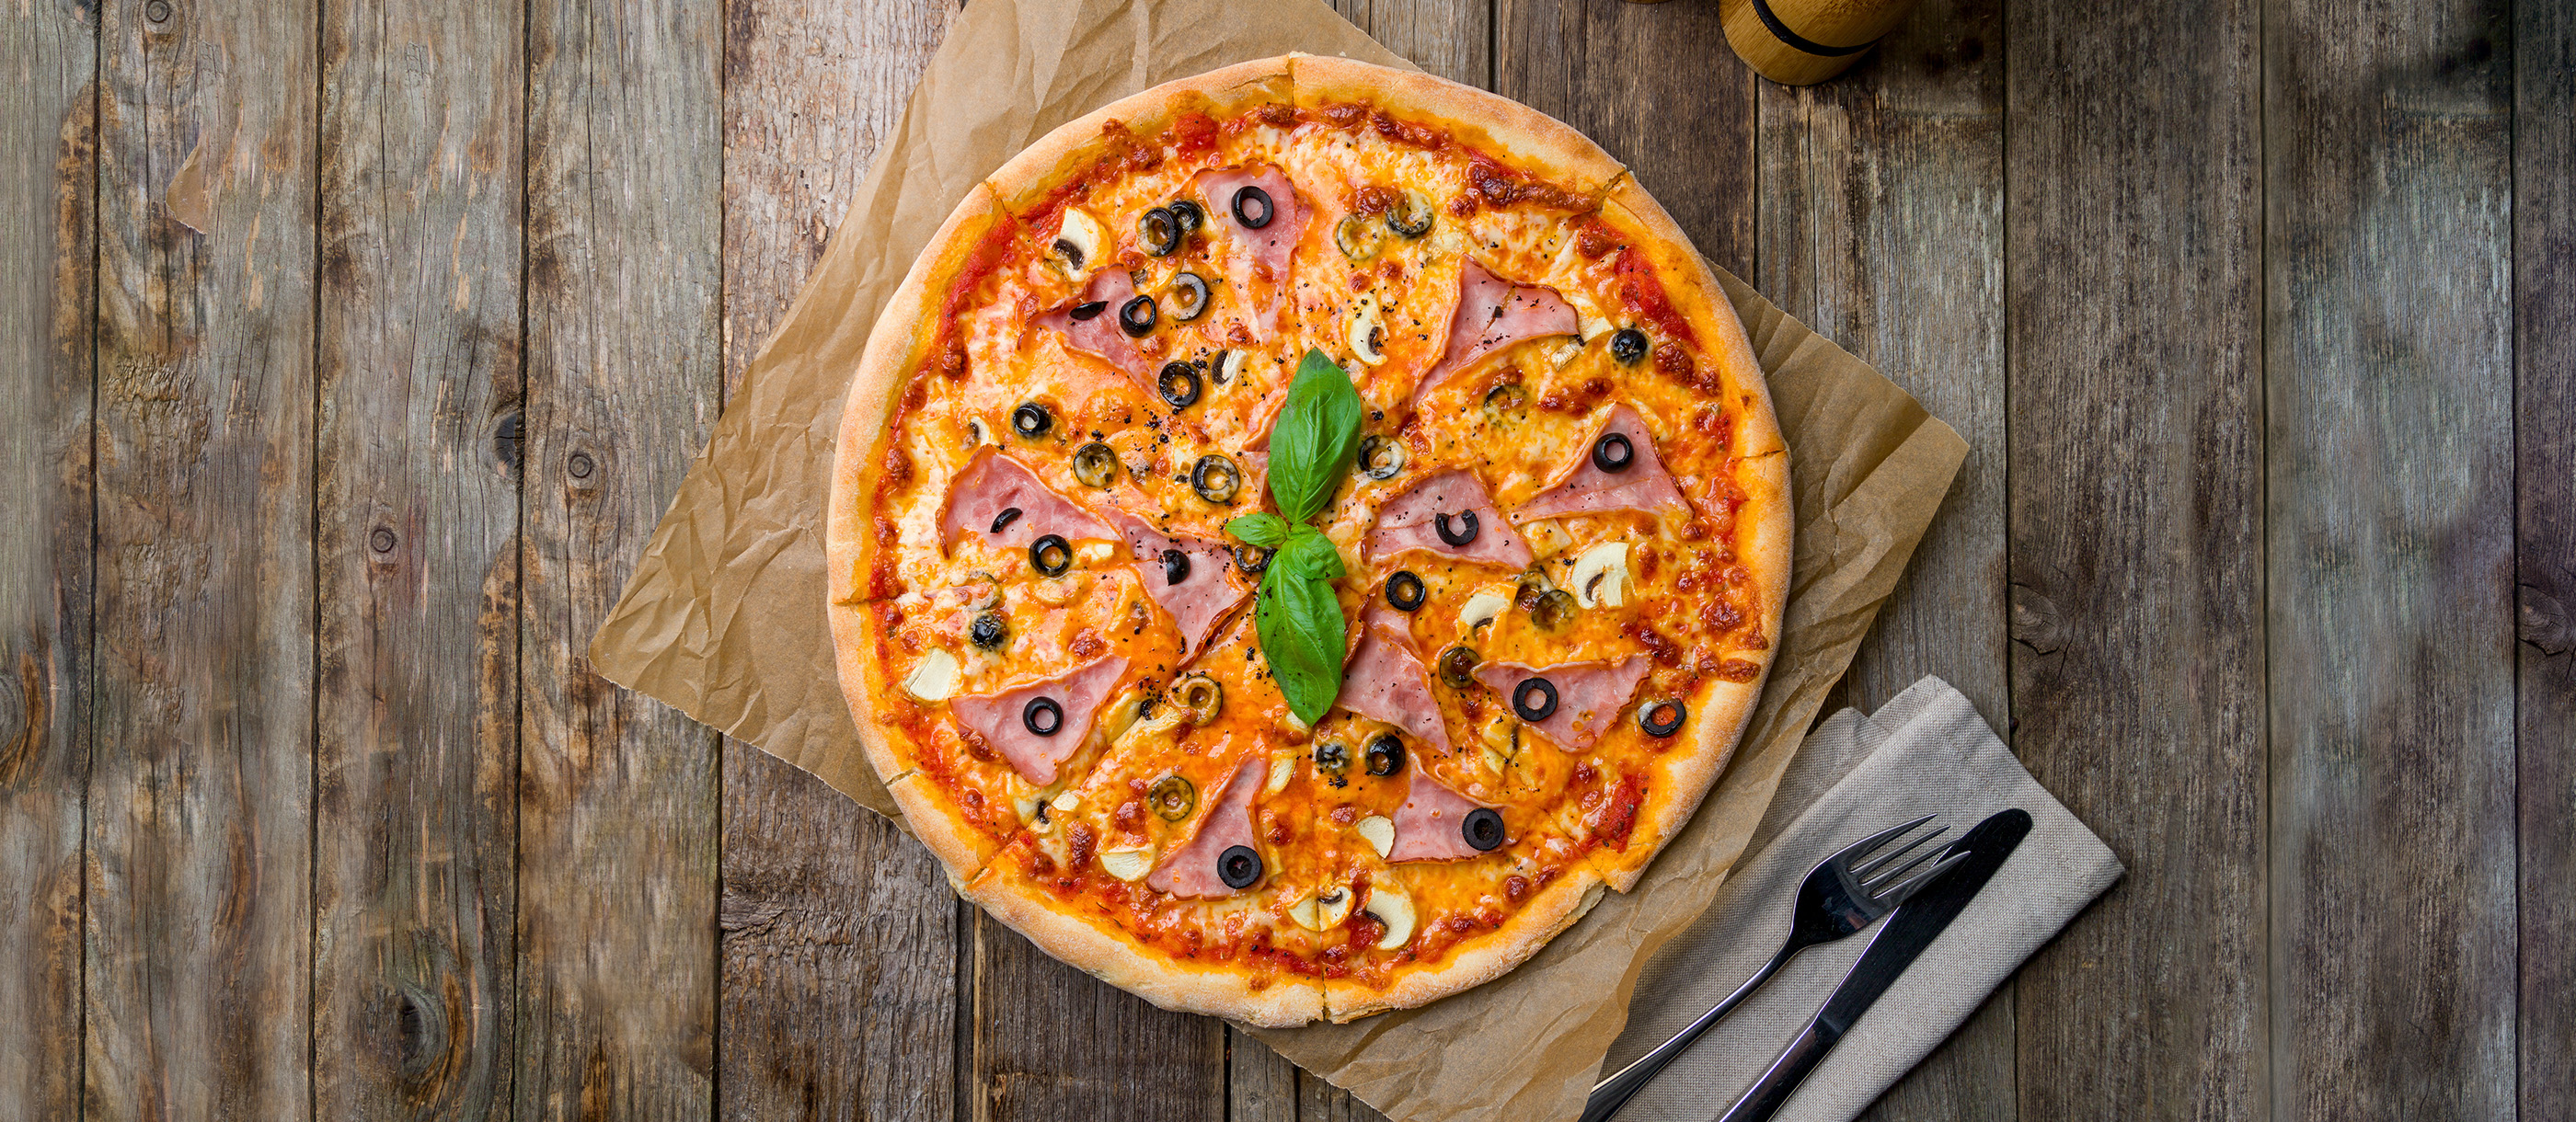 Pizza Capricciosa | Traditional Pizza From Italy